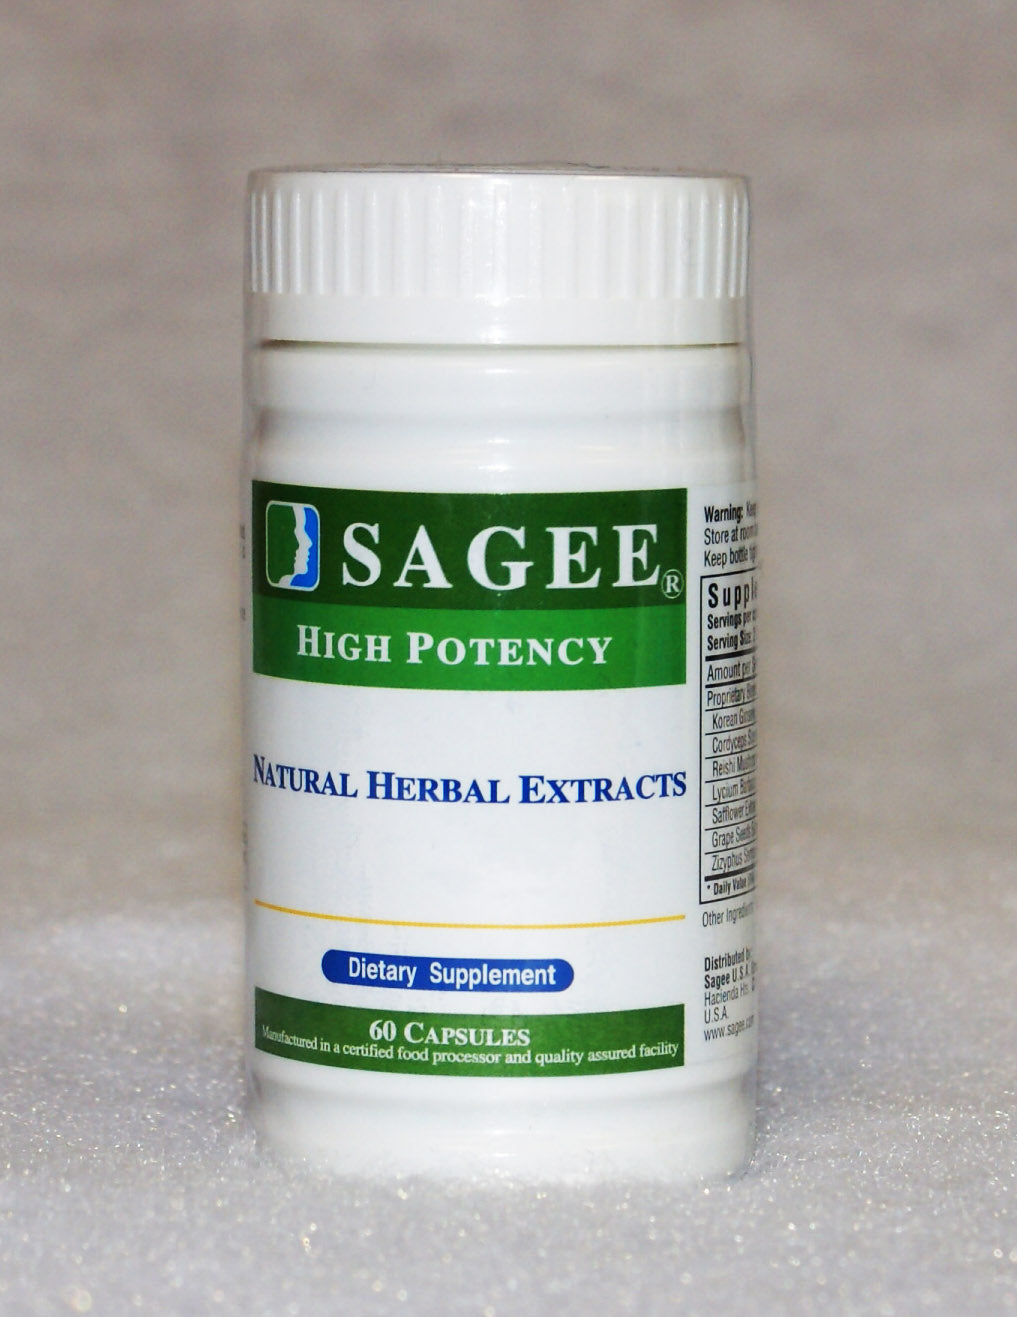 Sagee one bottle for brain health